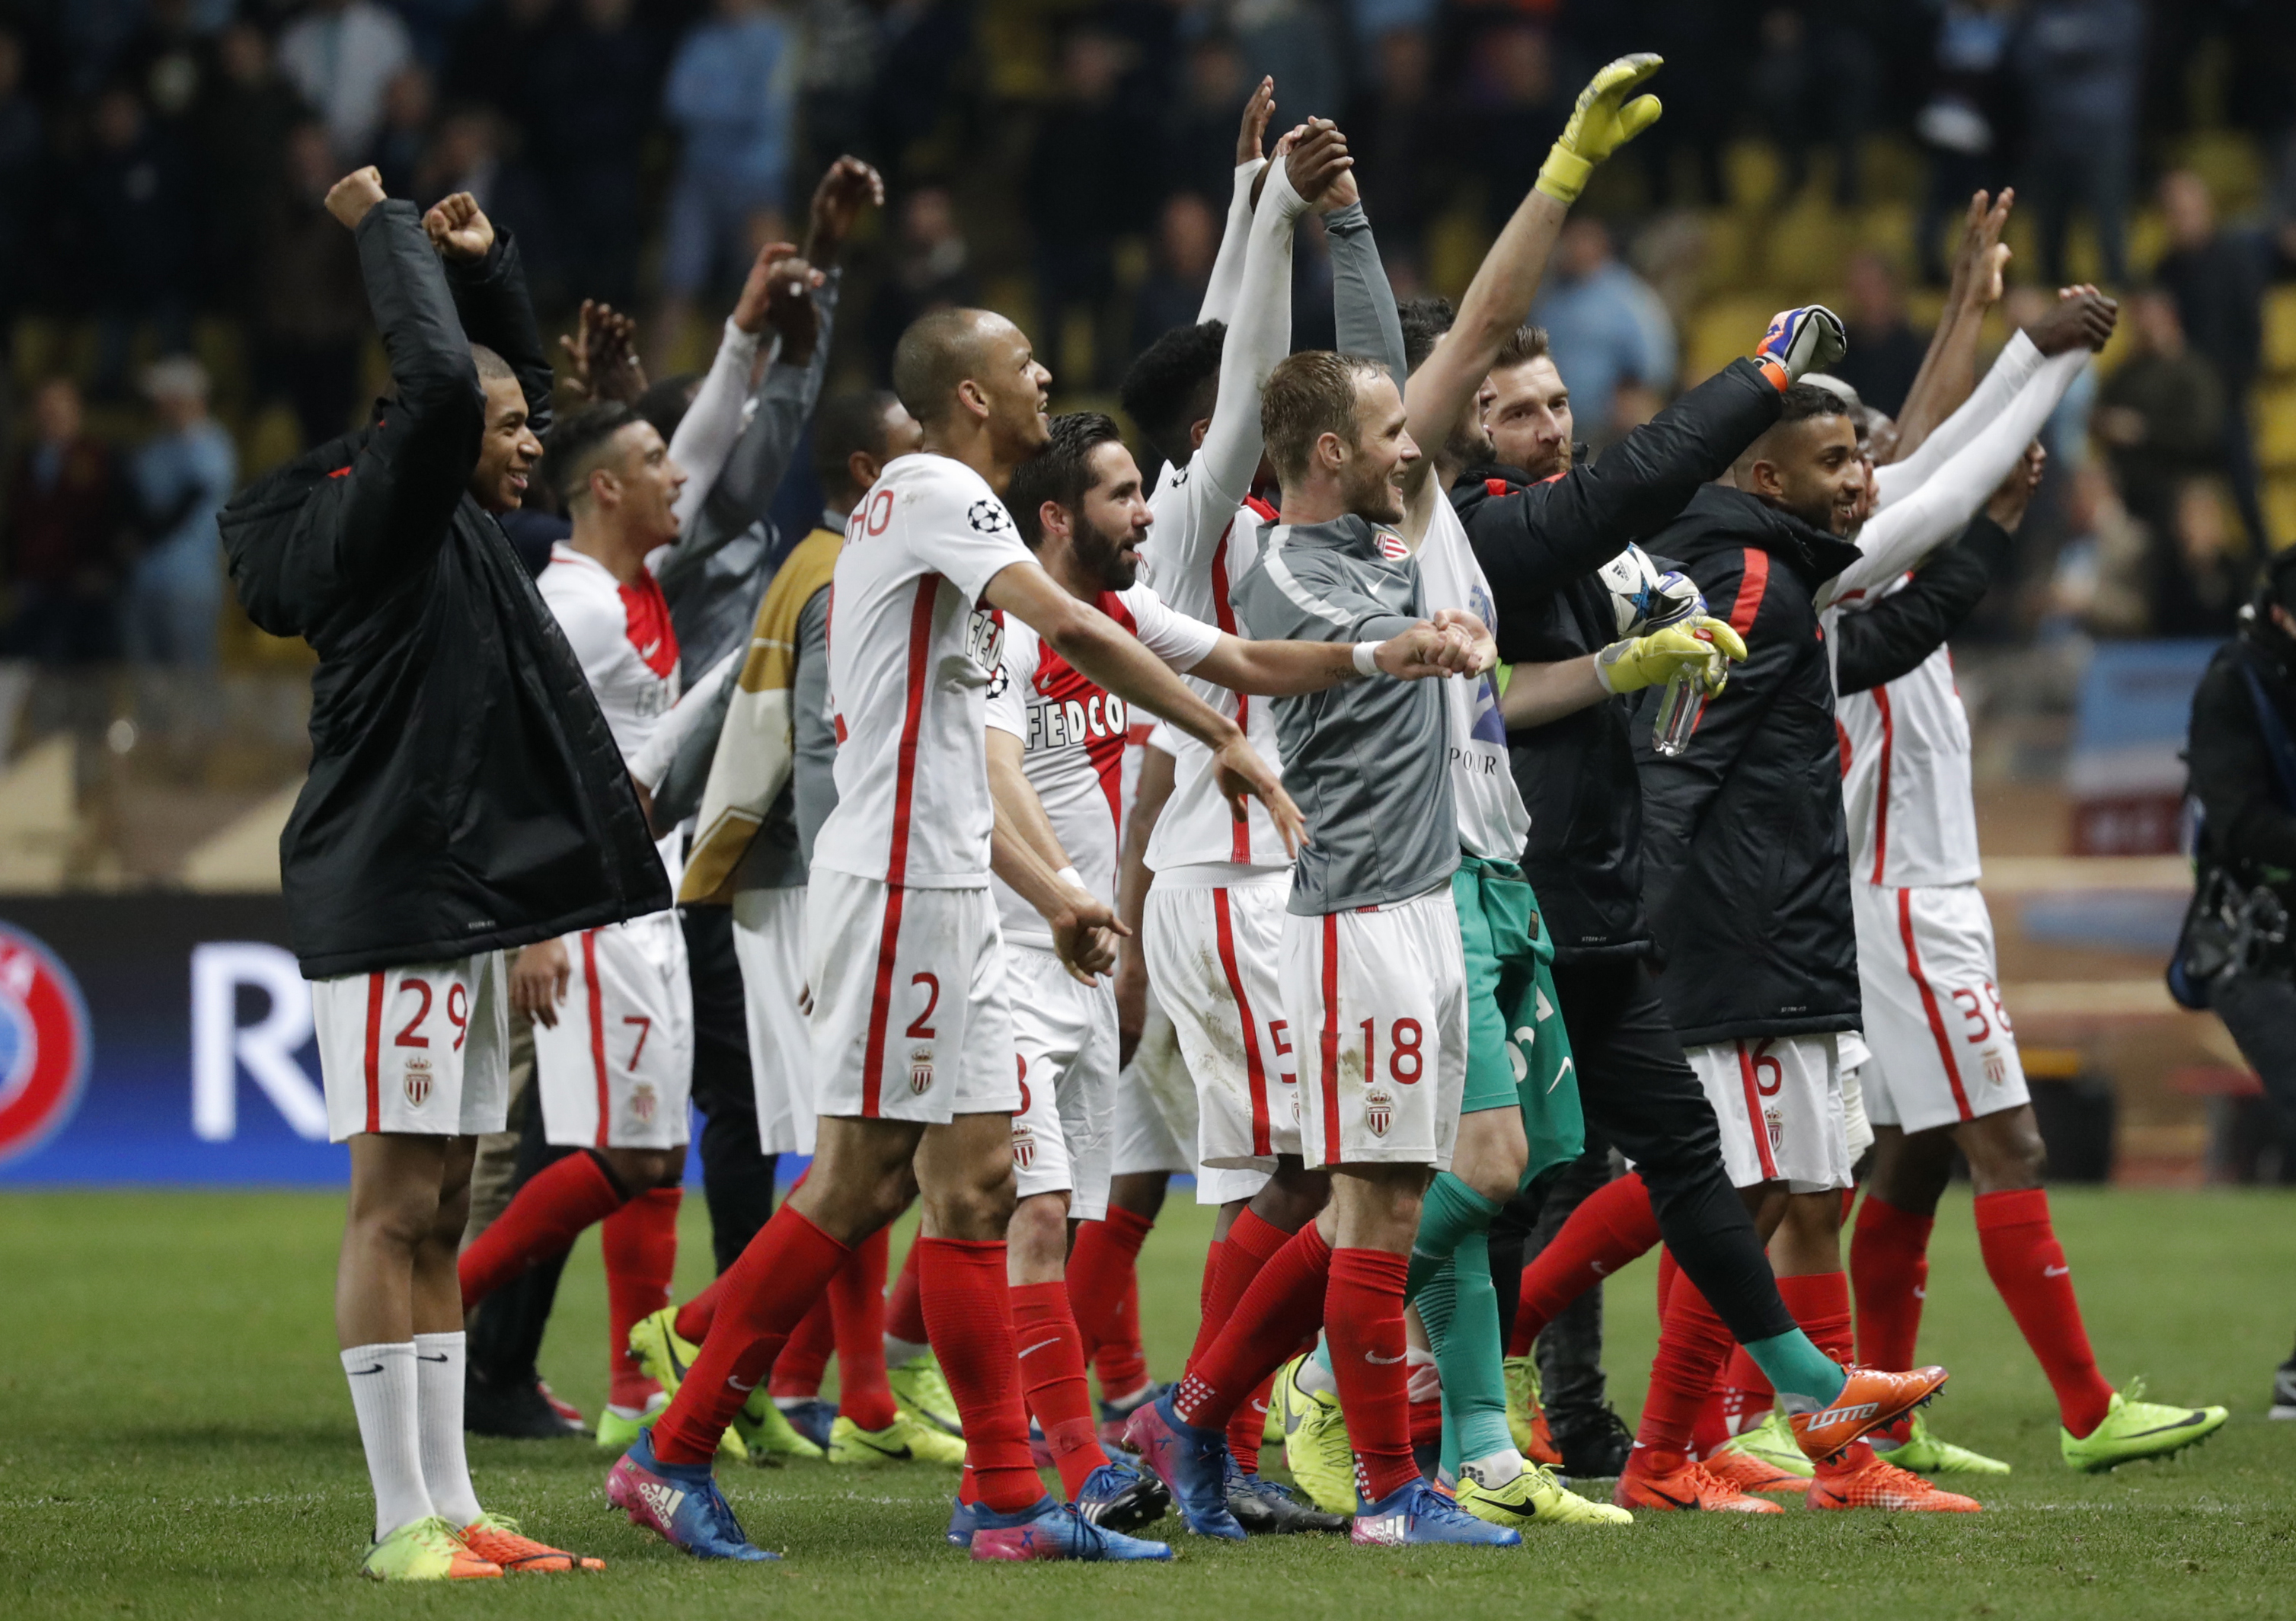 Radost fotbalistů Monaka z postupu. Foto: Reuters